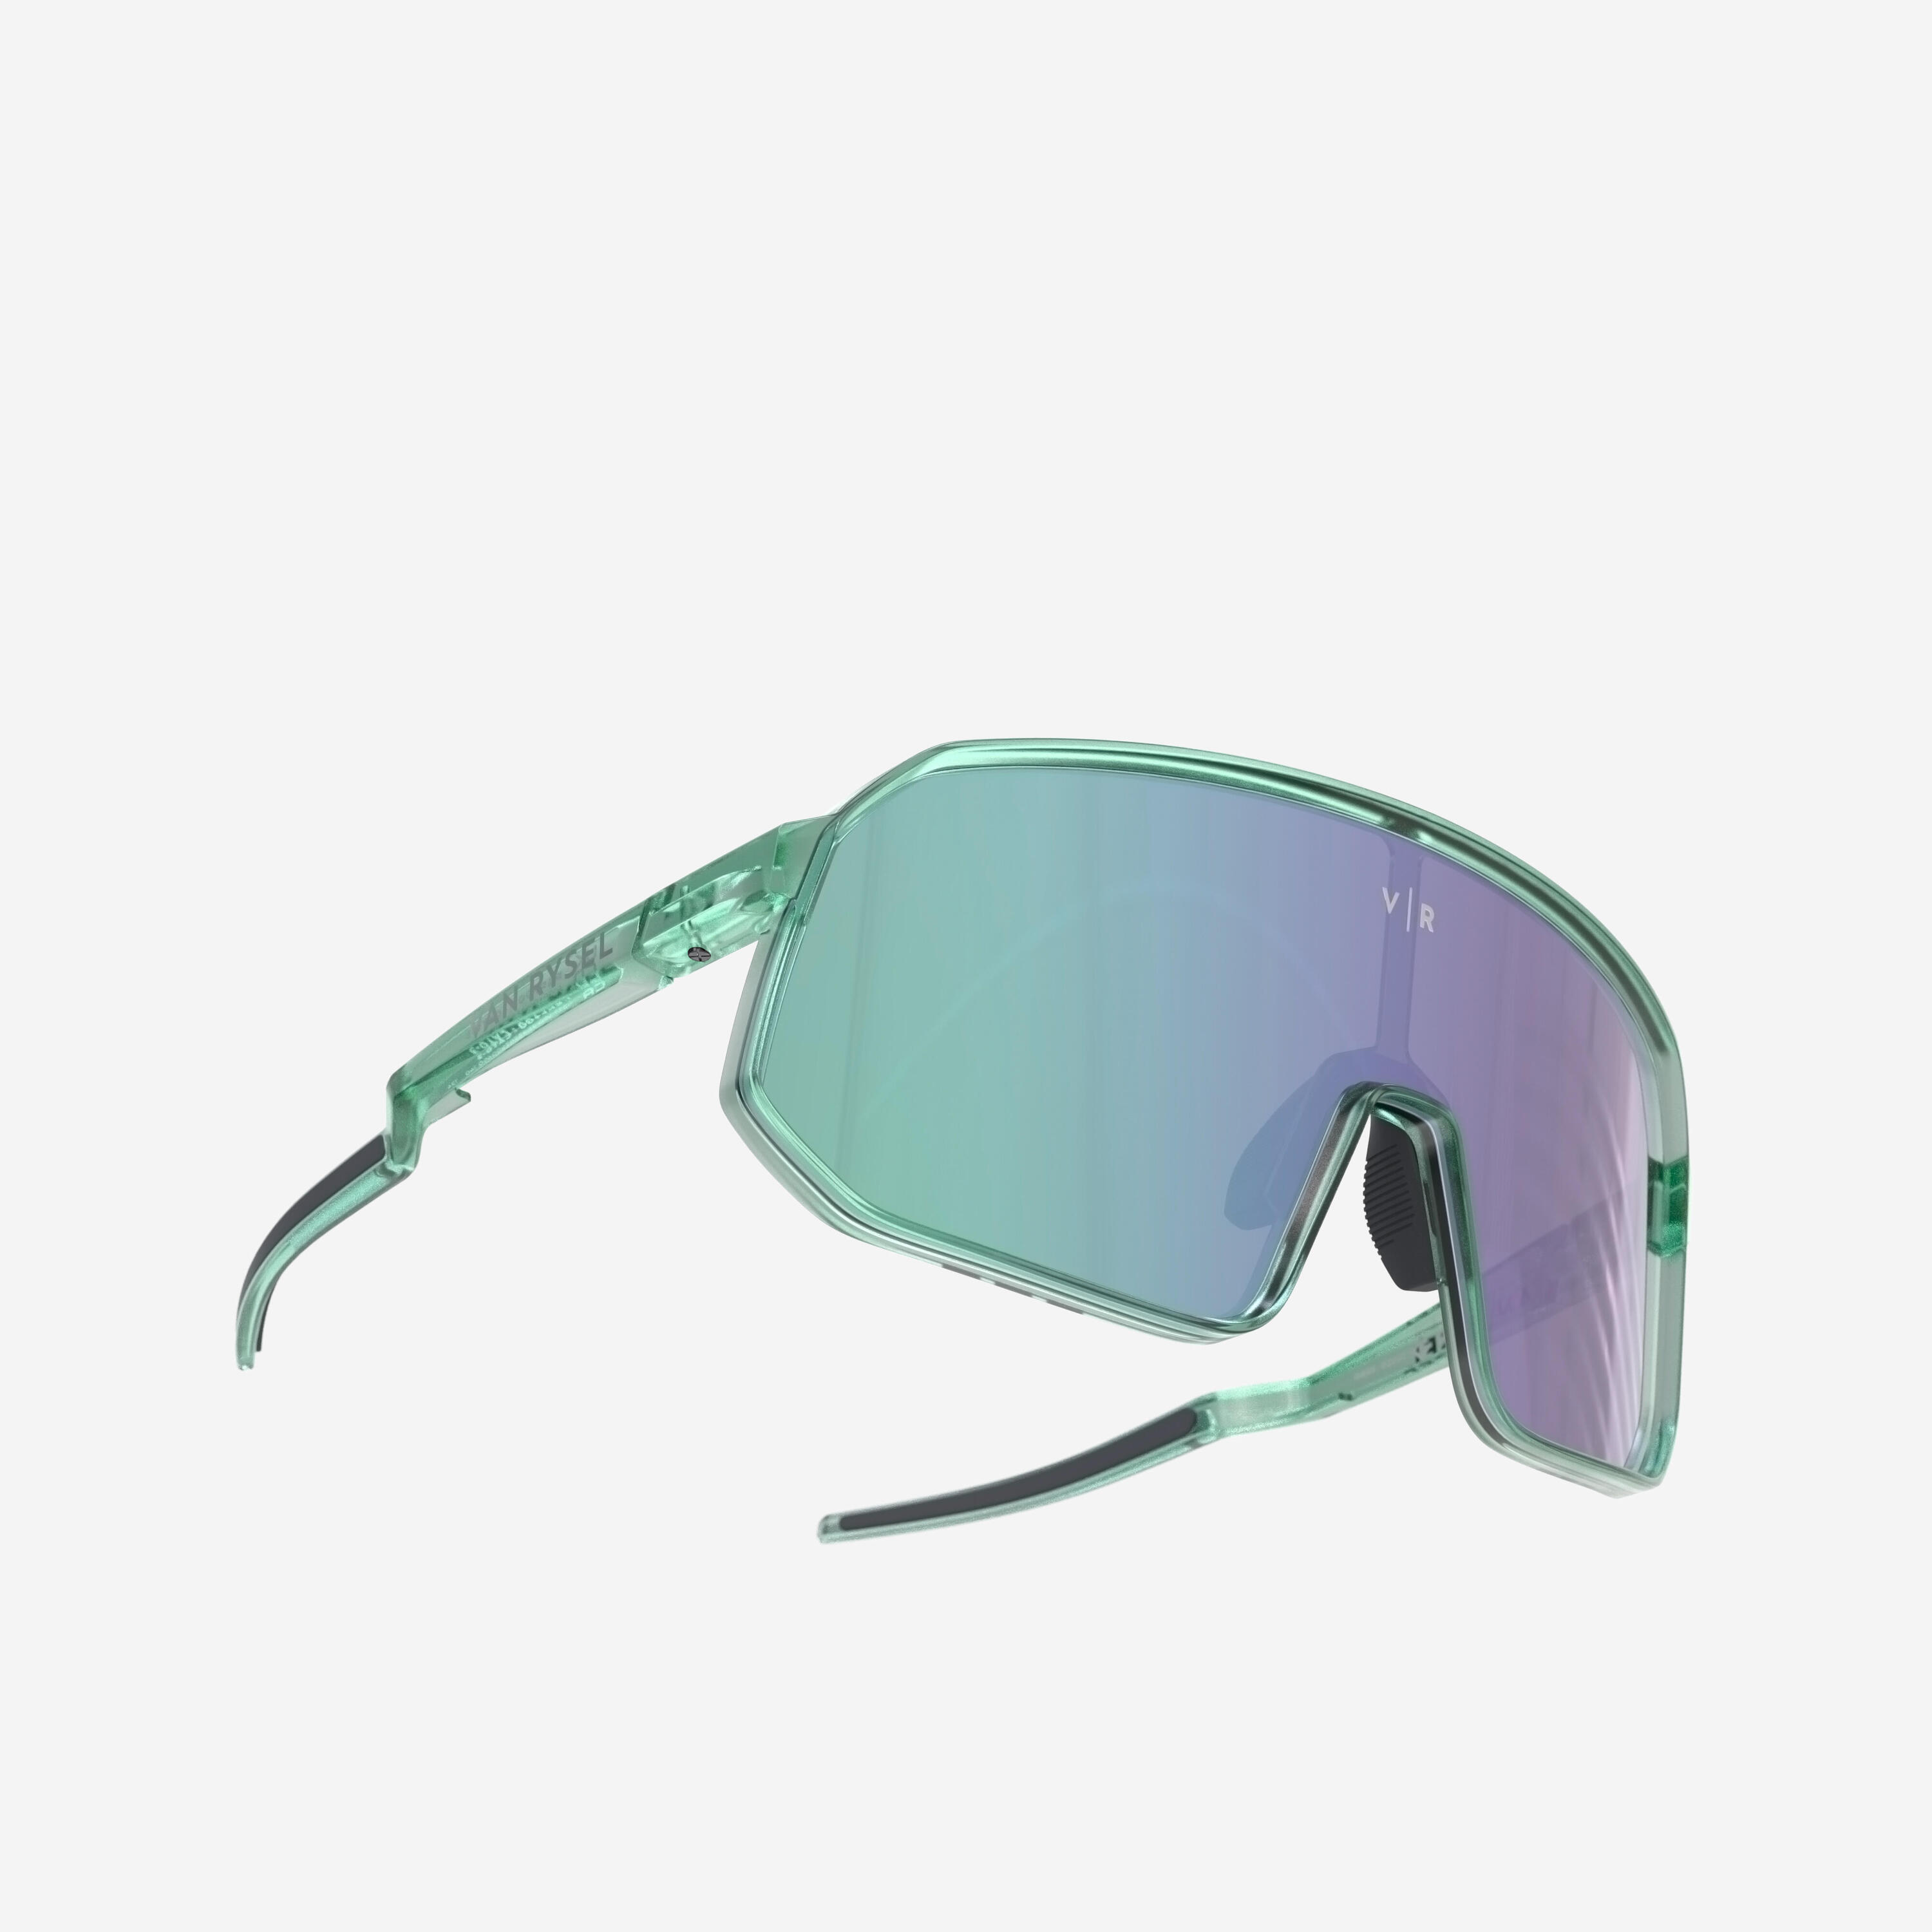 Cycling Cat 3 Sunglasses RoadR 900 Perf - Translucent 5/5